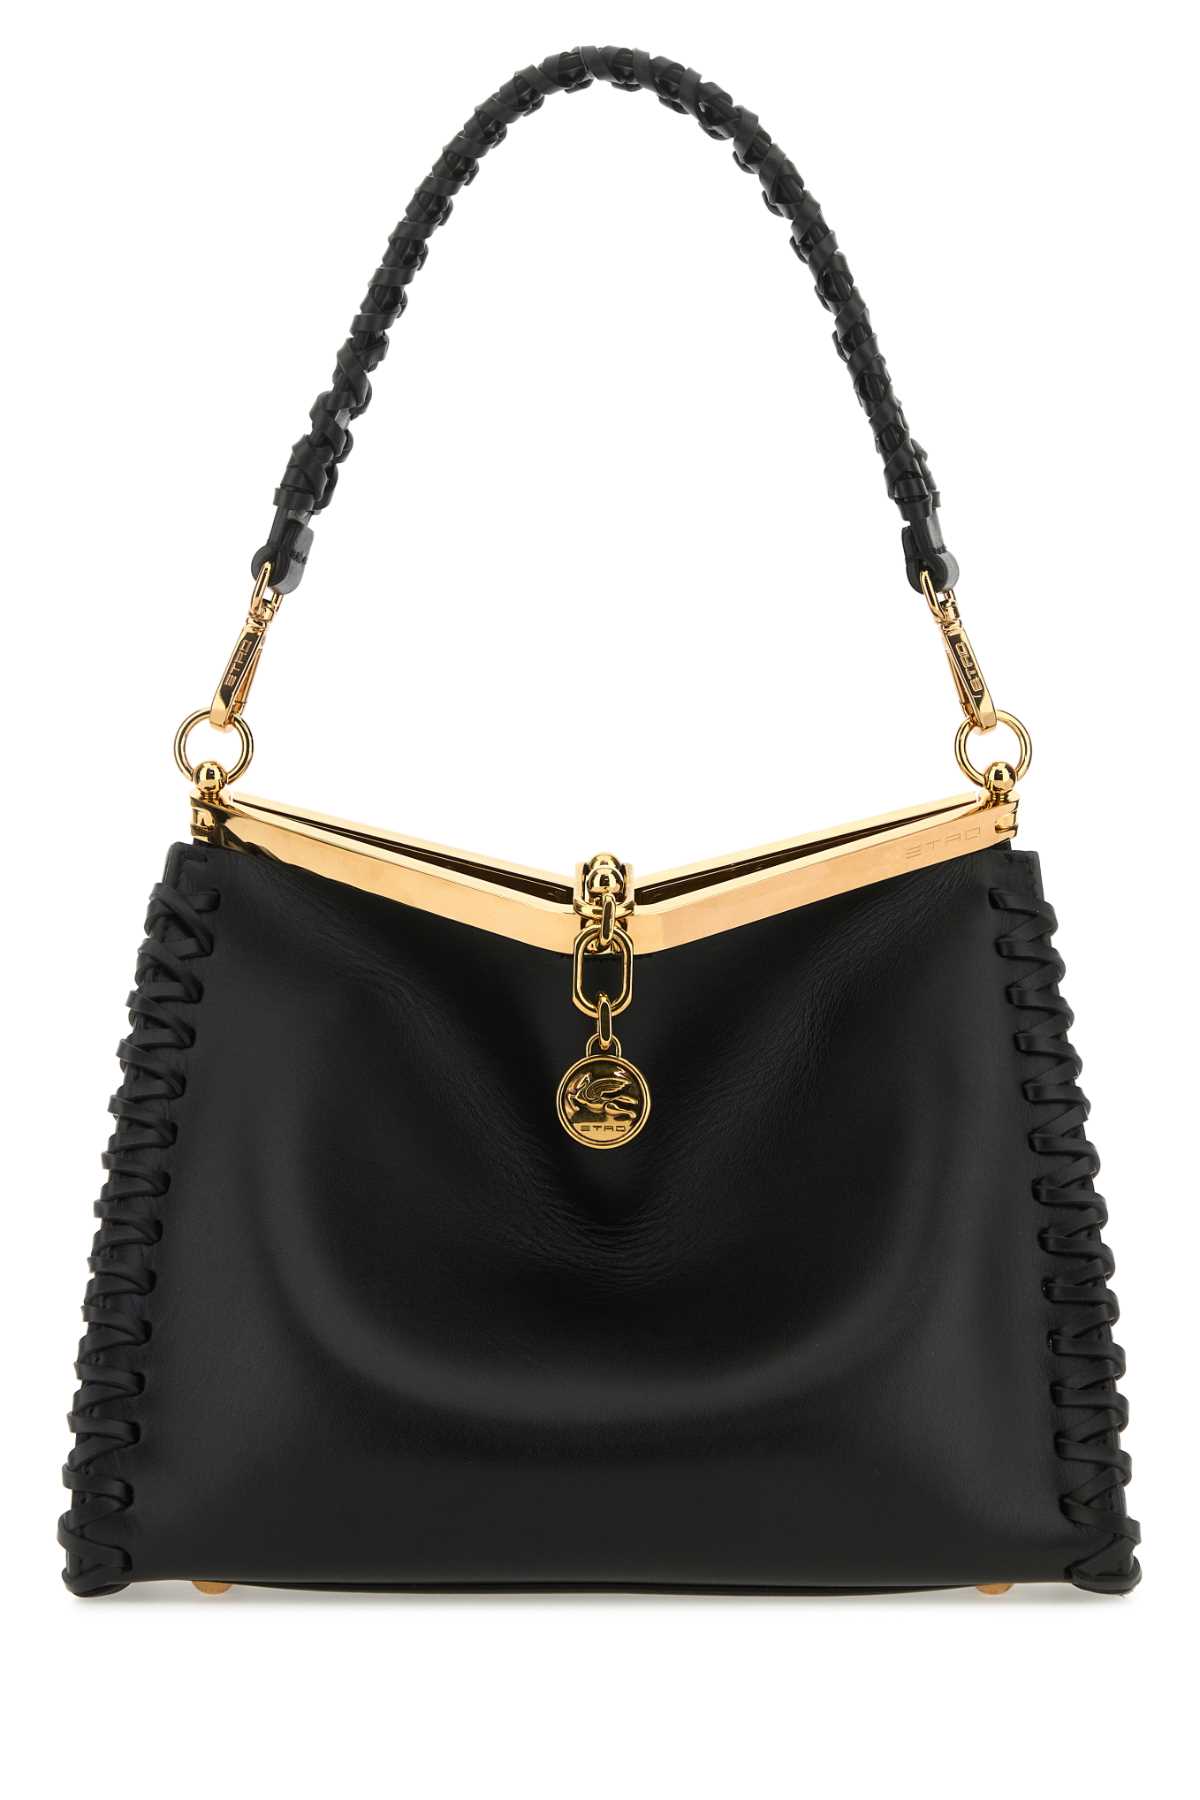 Etro Black Leather Vela Handbag In N0000